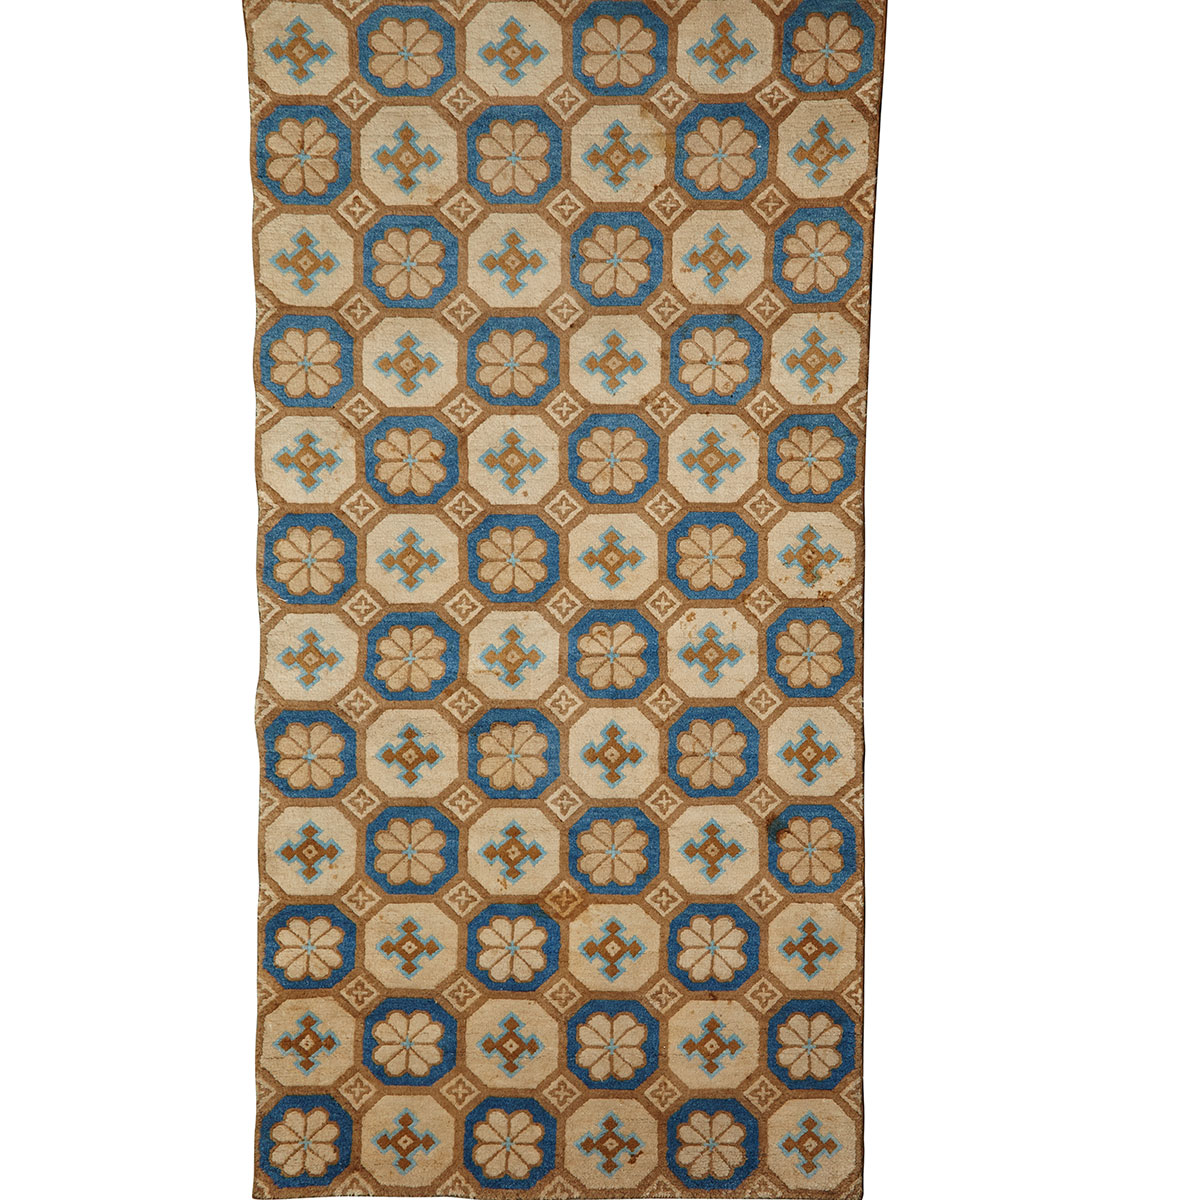 Hemp Carpet, Taisho Period (1912-1926)